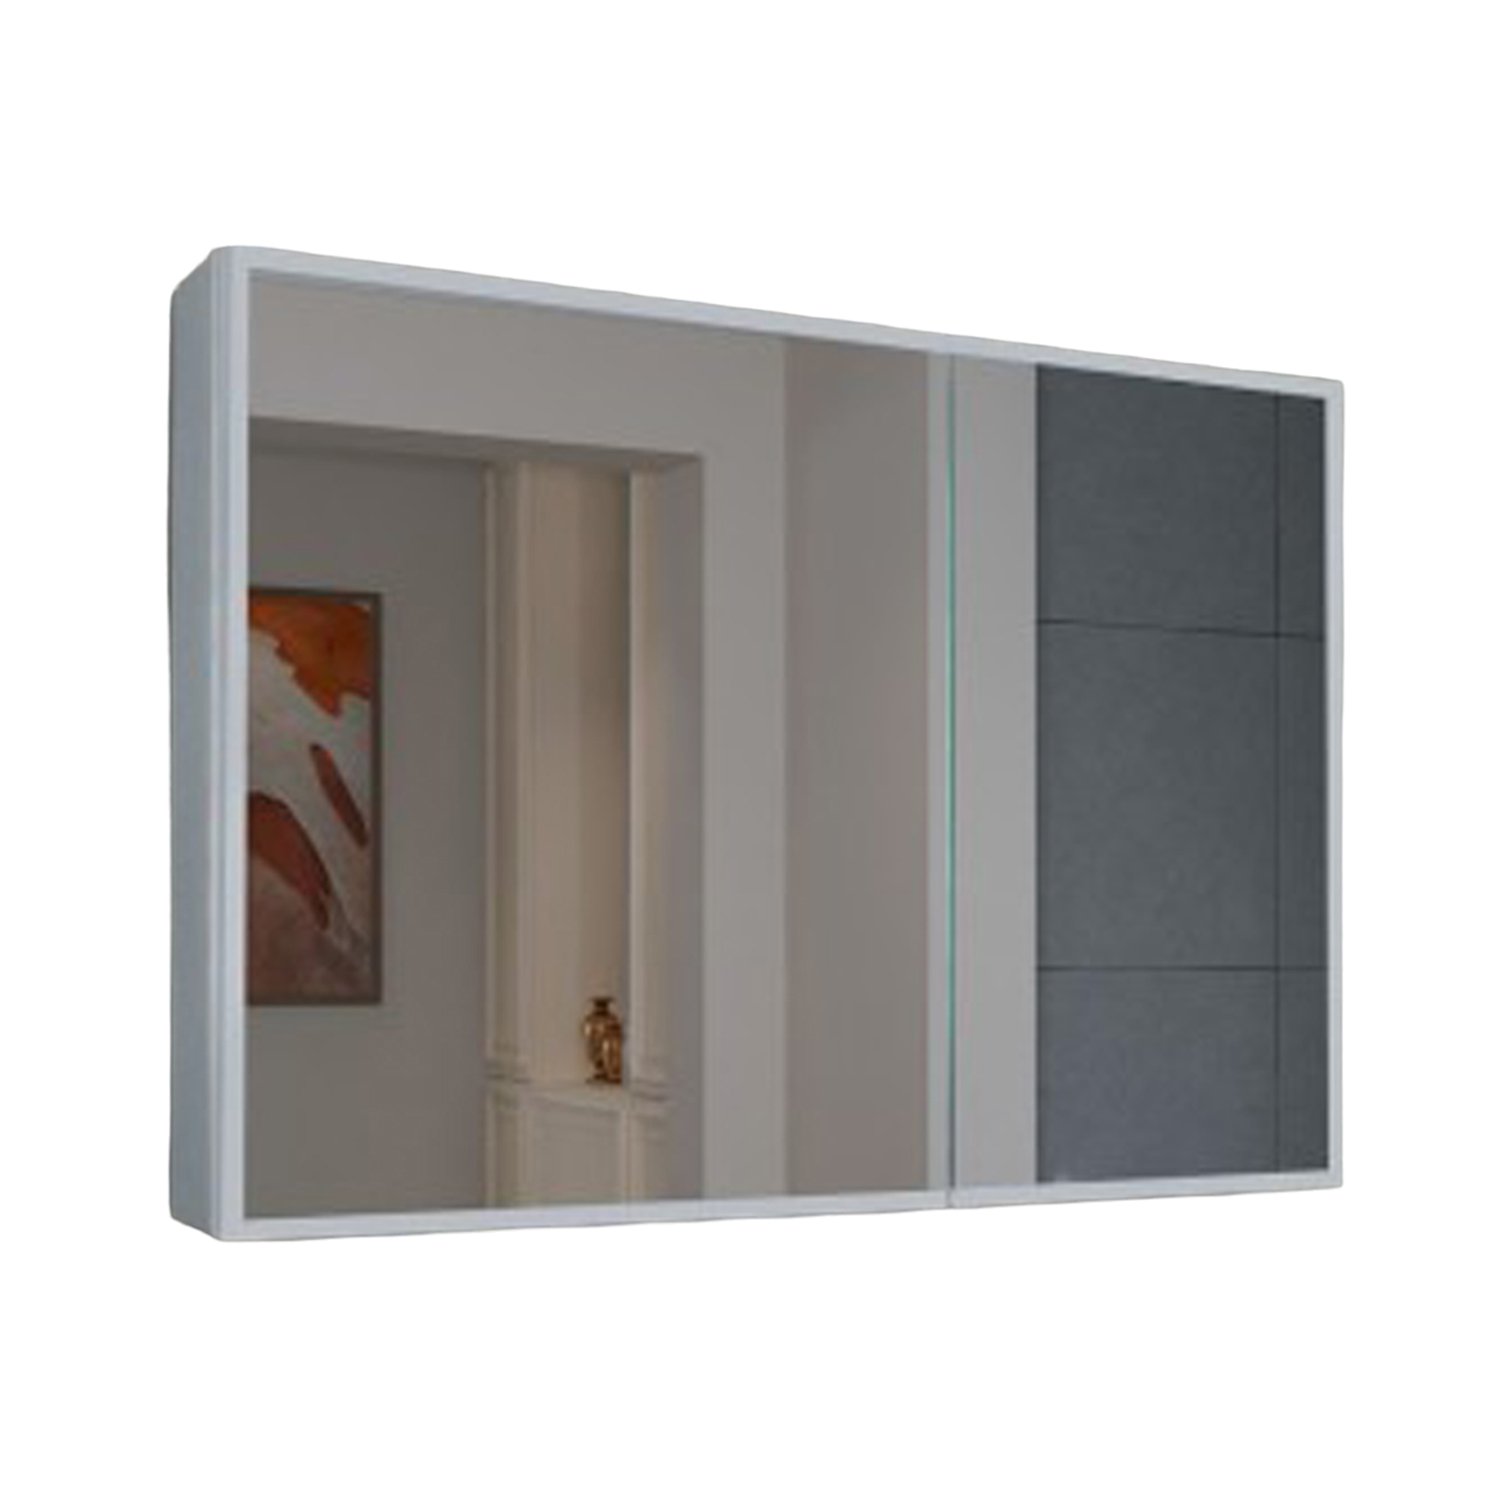 Шкаф-зеркало Esbano ES-3808D 80, с подсветкой, функцией антизапотевания, крючками для фена, цвет алюминий